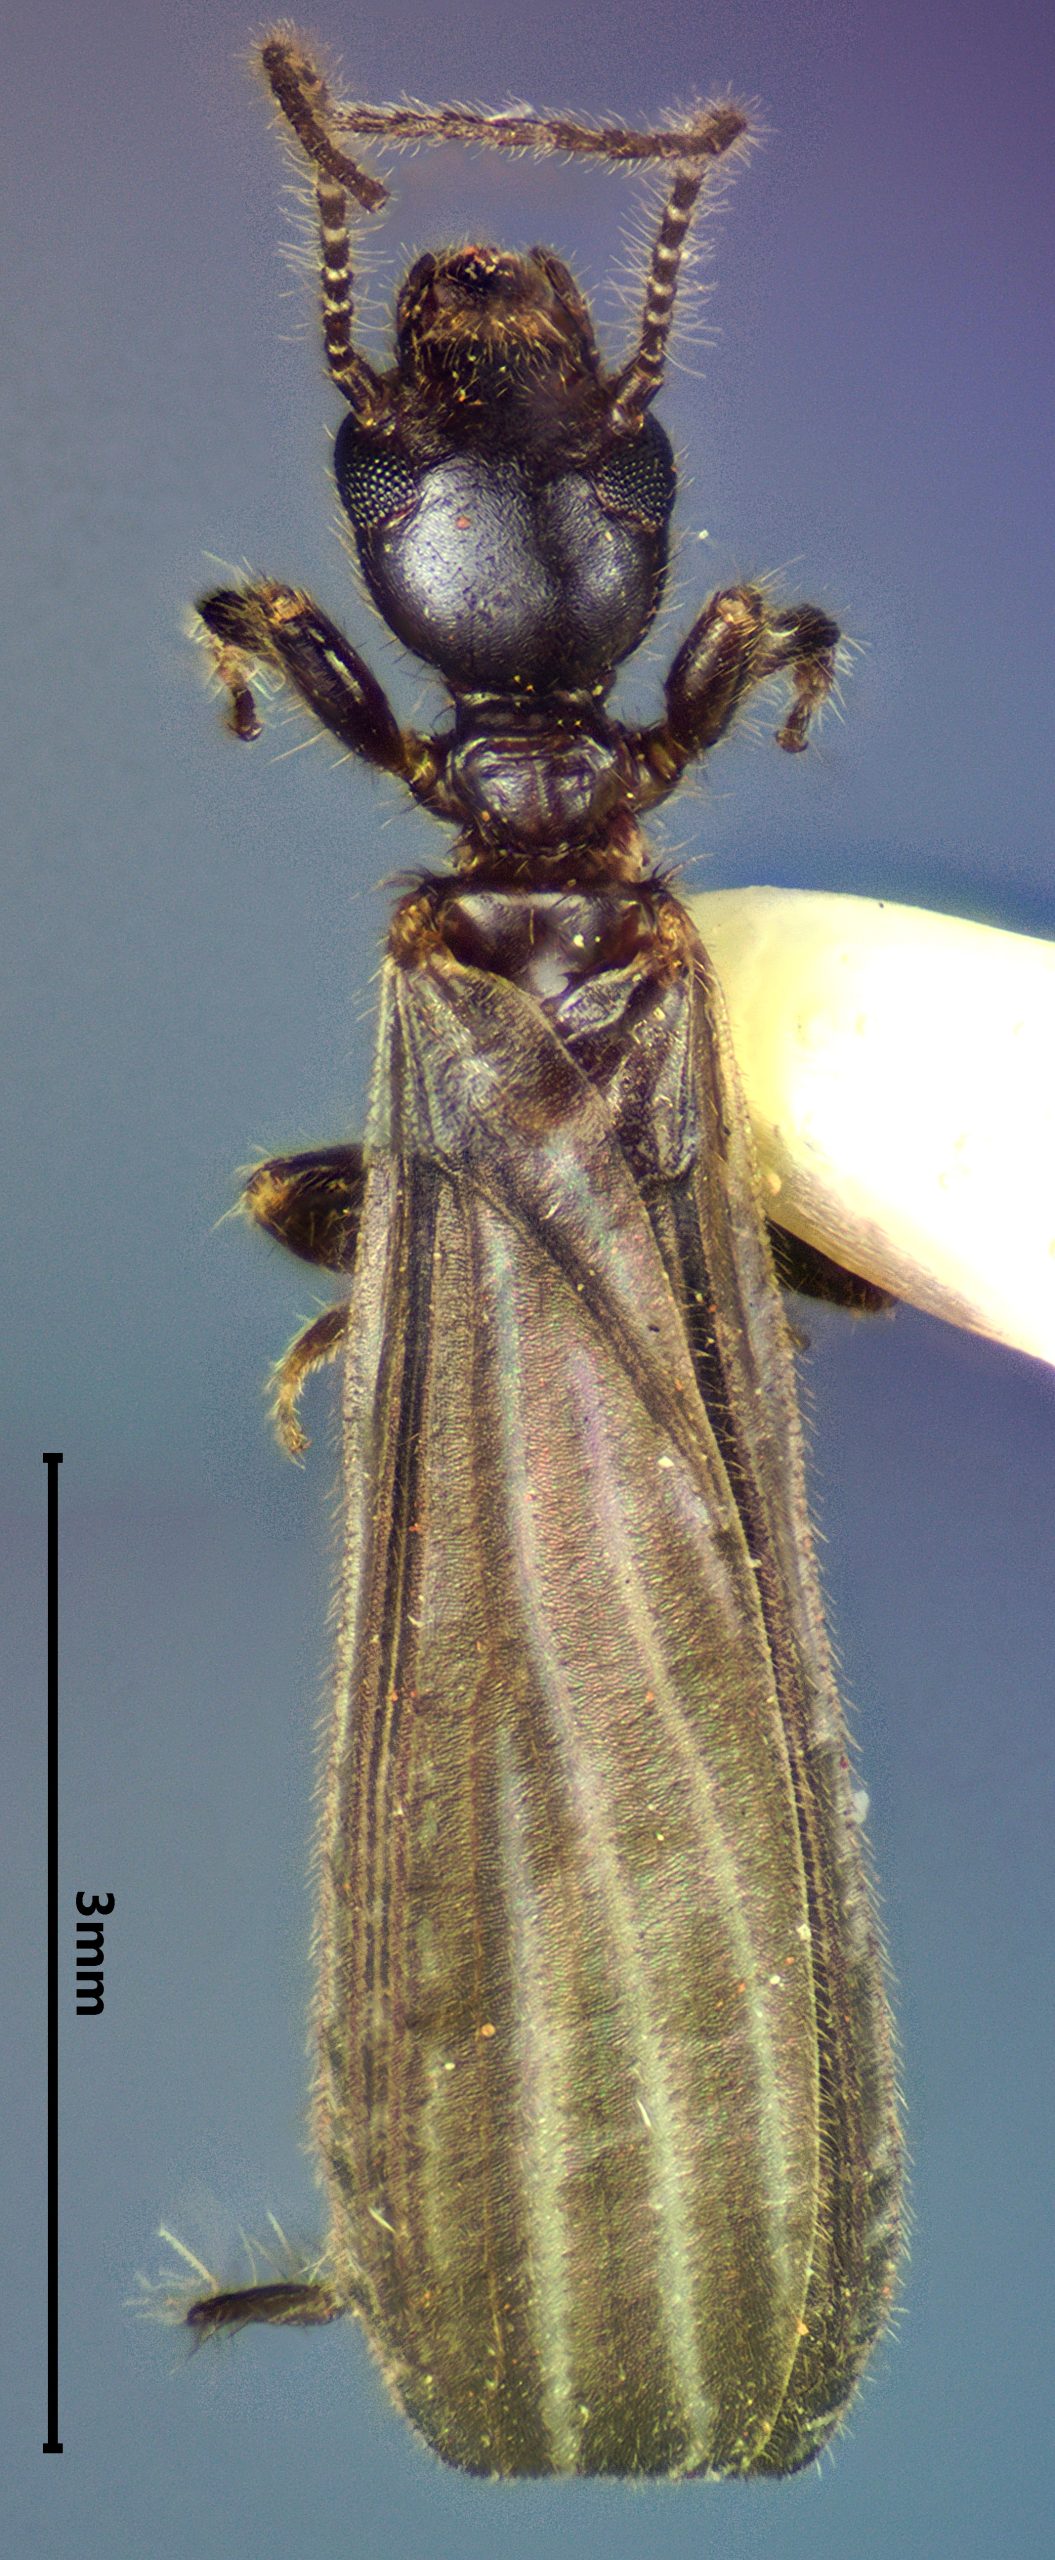 Oligotoma nigra